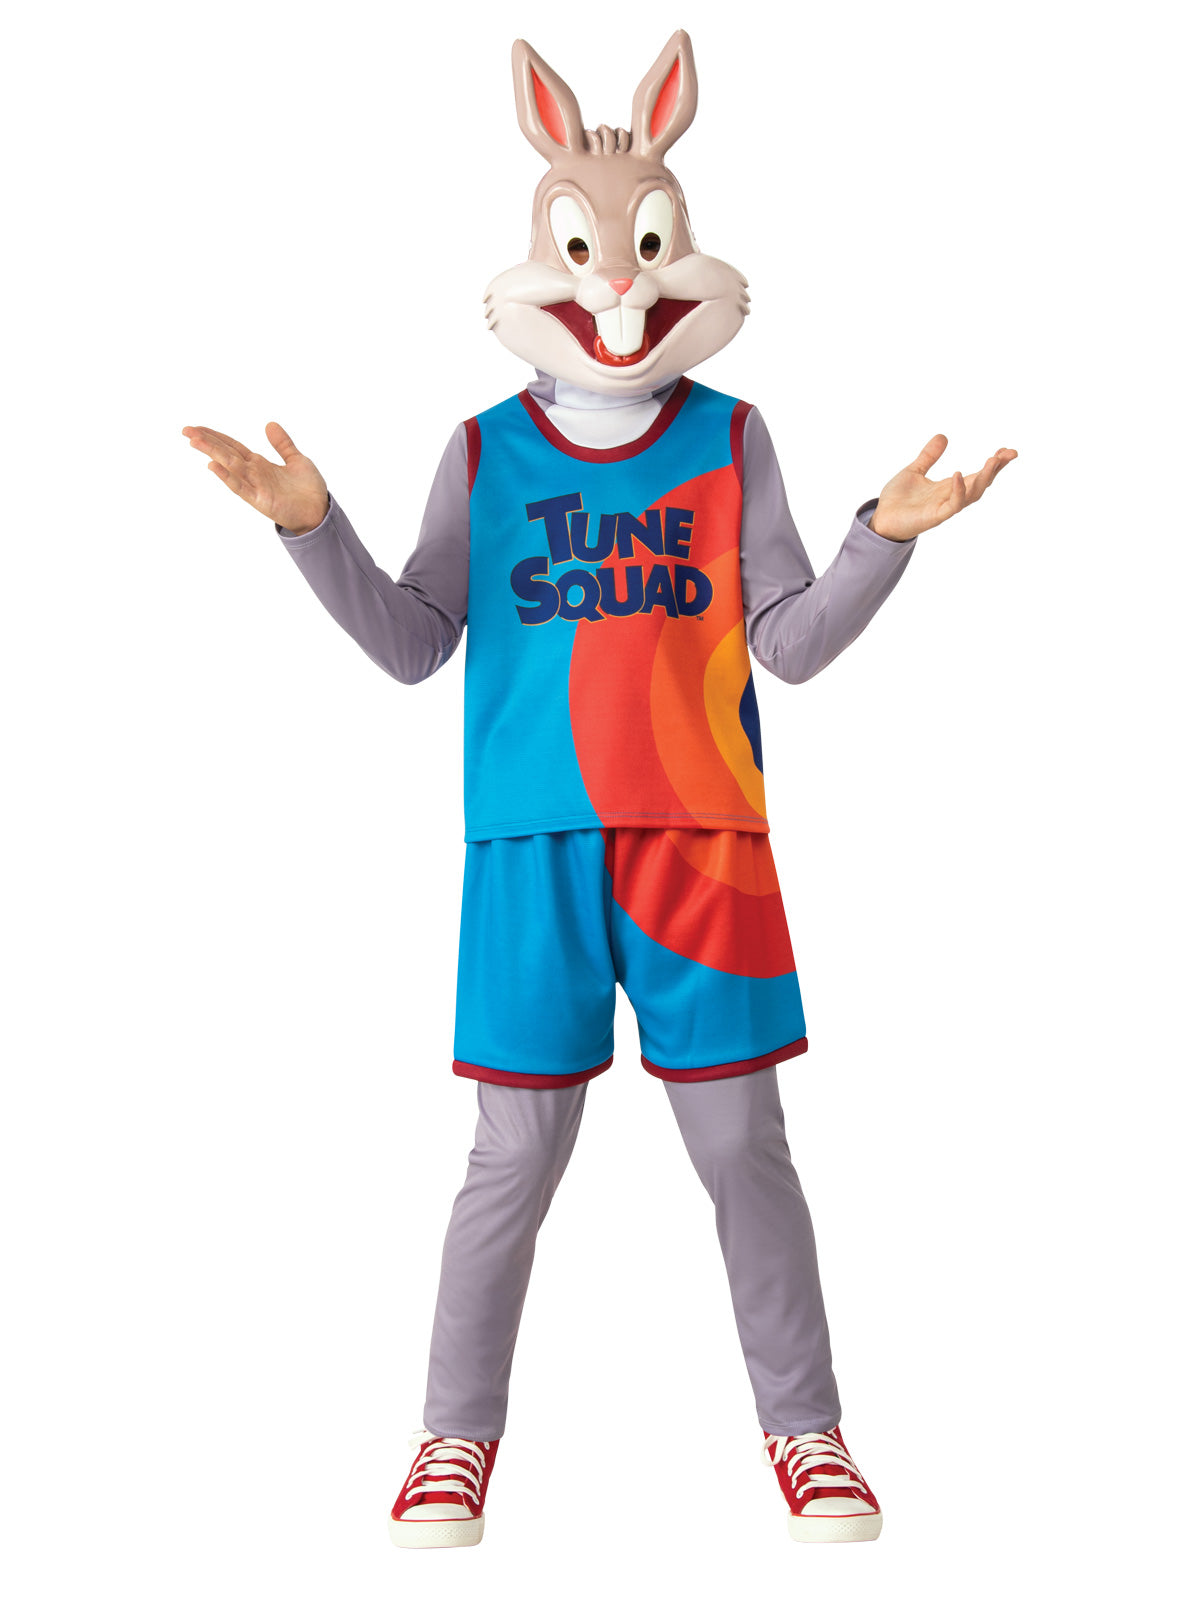 Bugs Bunny Space Jam 2 Child Costume - Looney Tunes Licensed